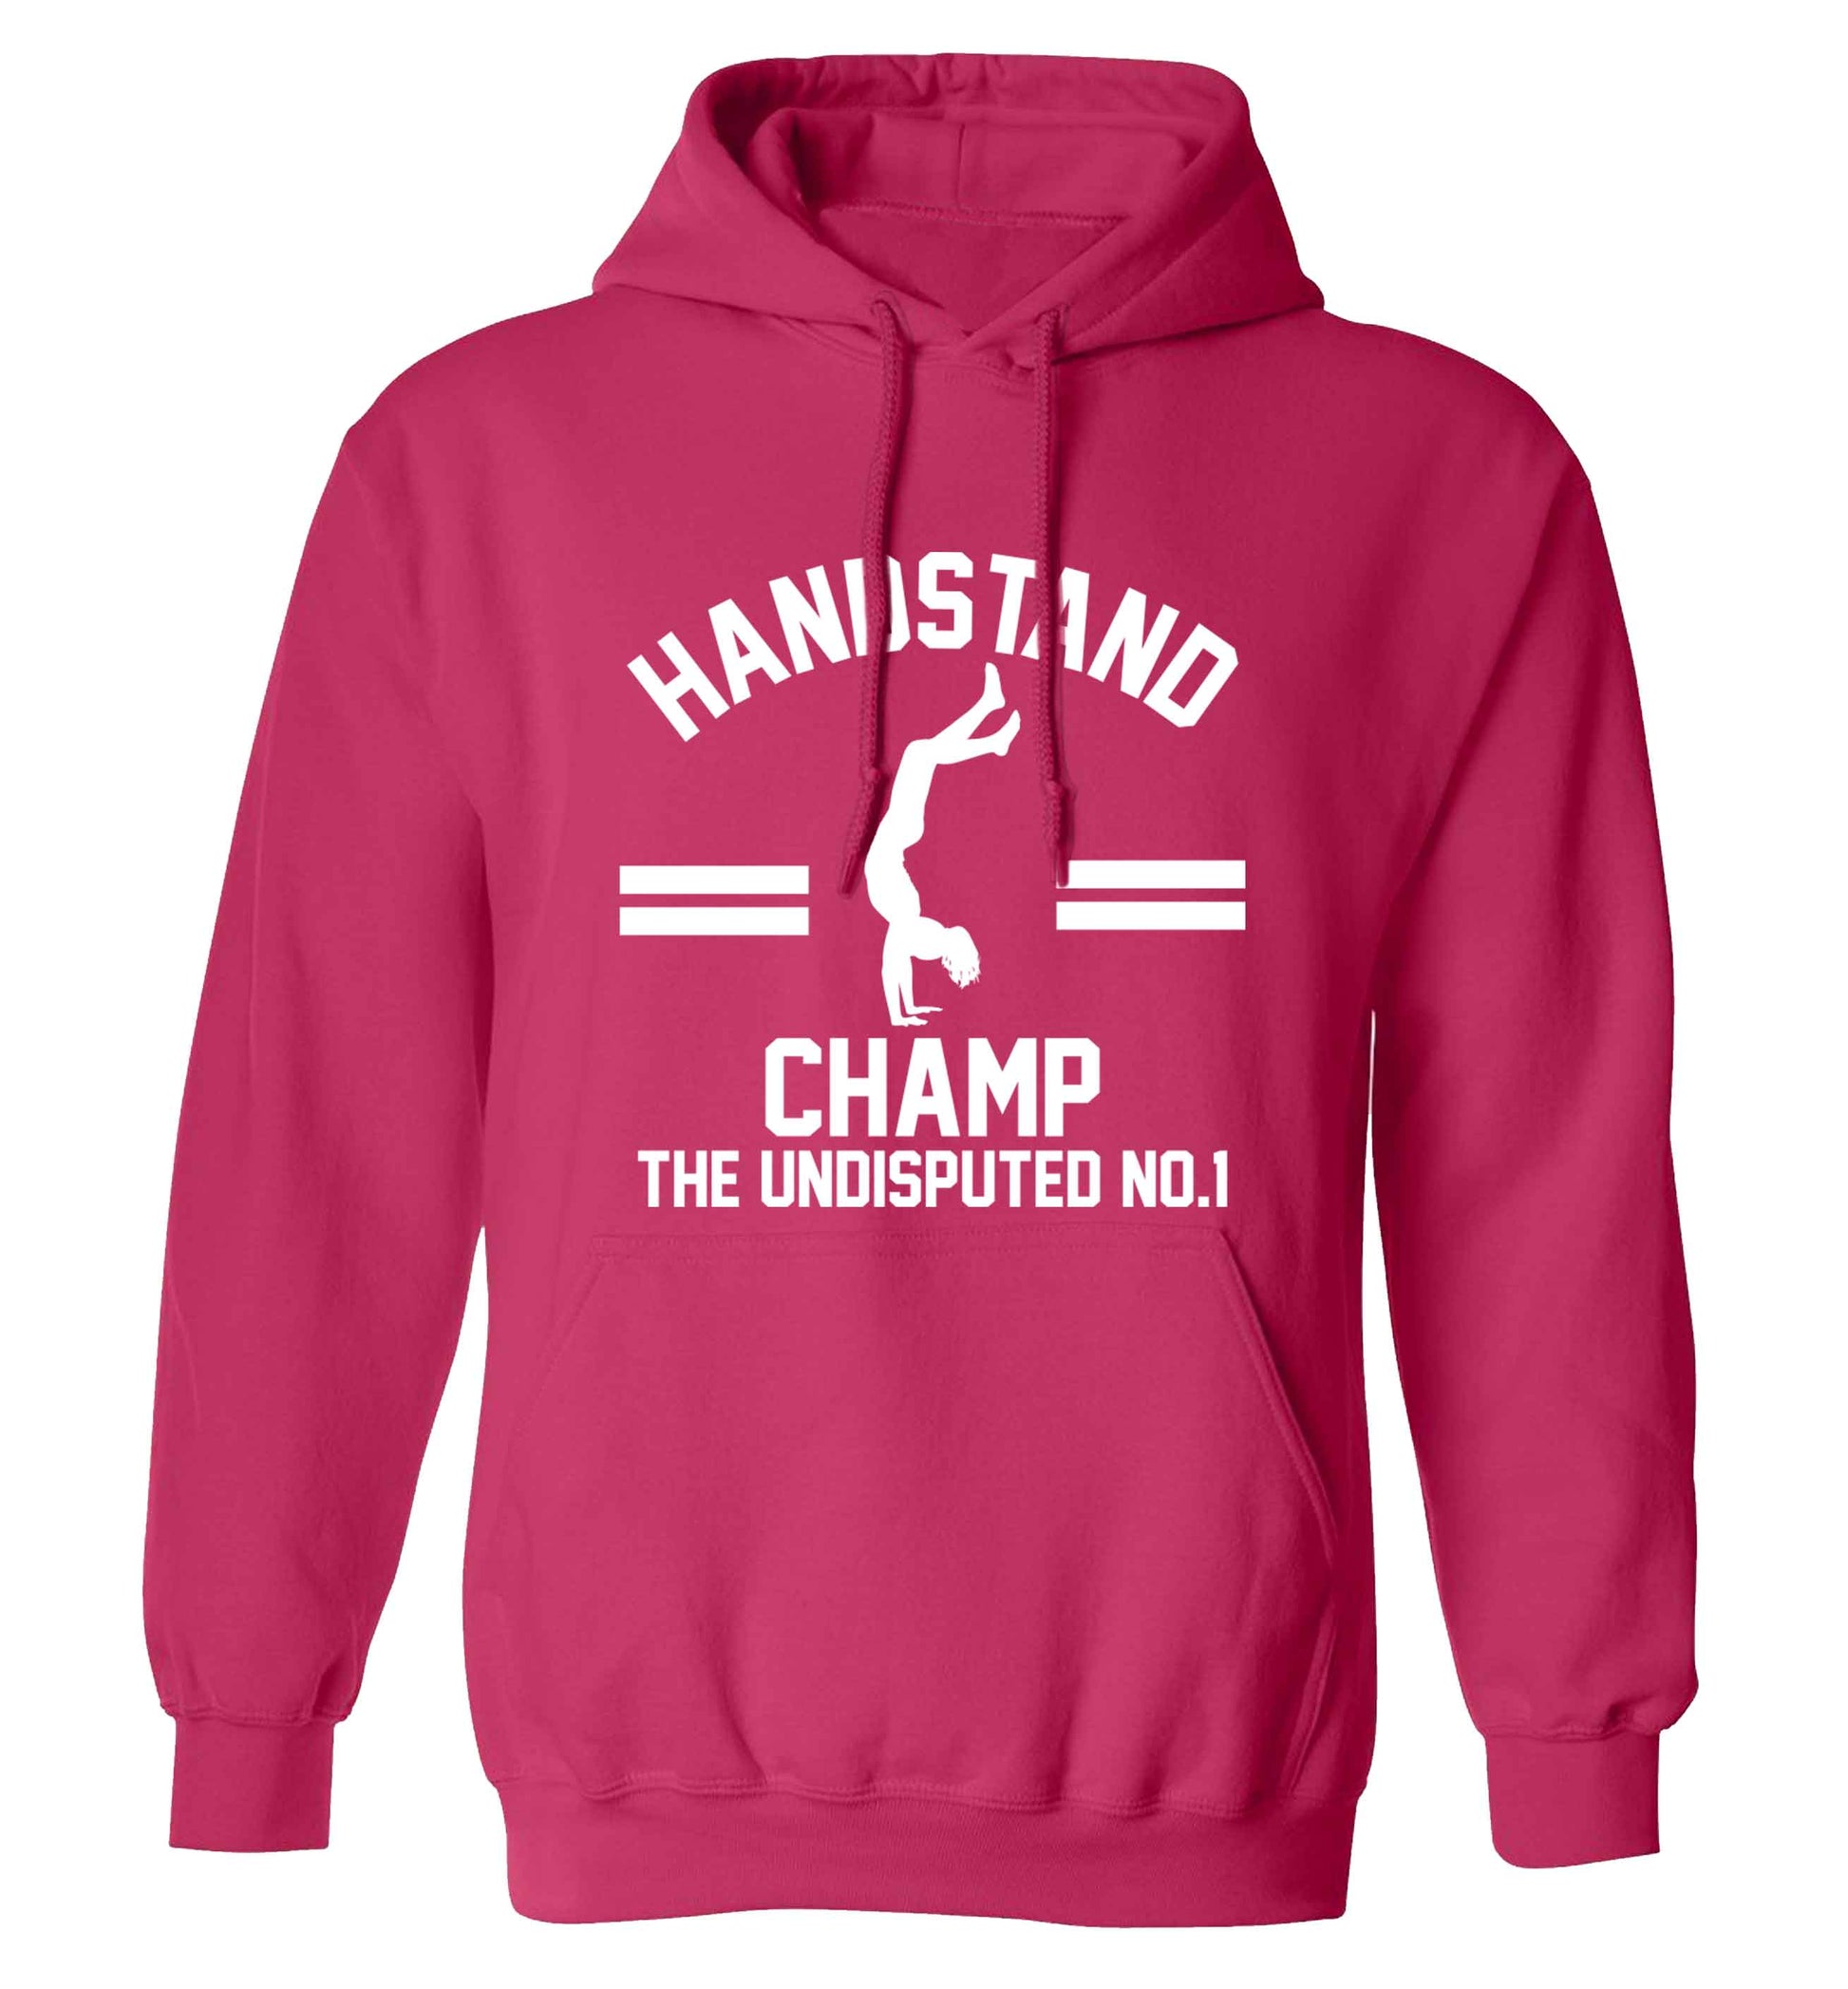 Undisputed handstand championship no.1  adults unisex pink hoodie 2XL